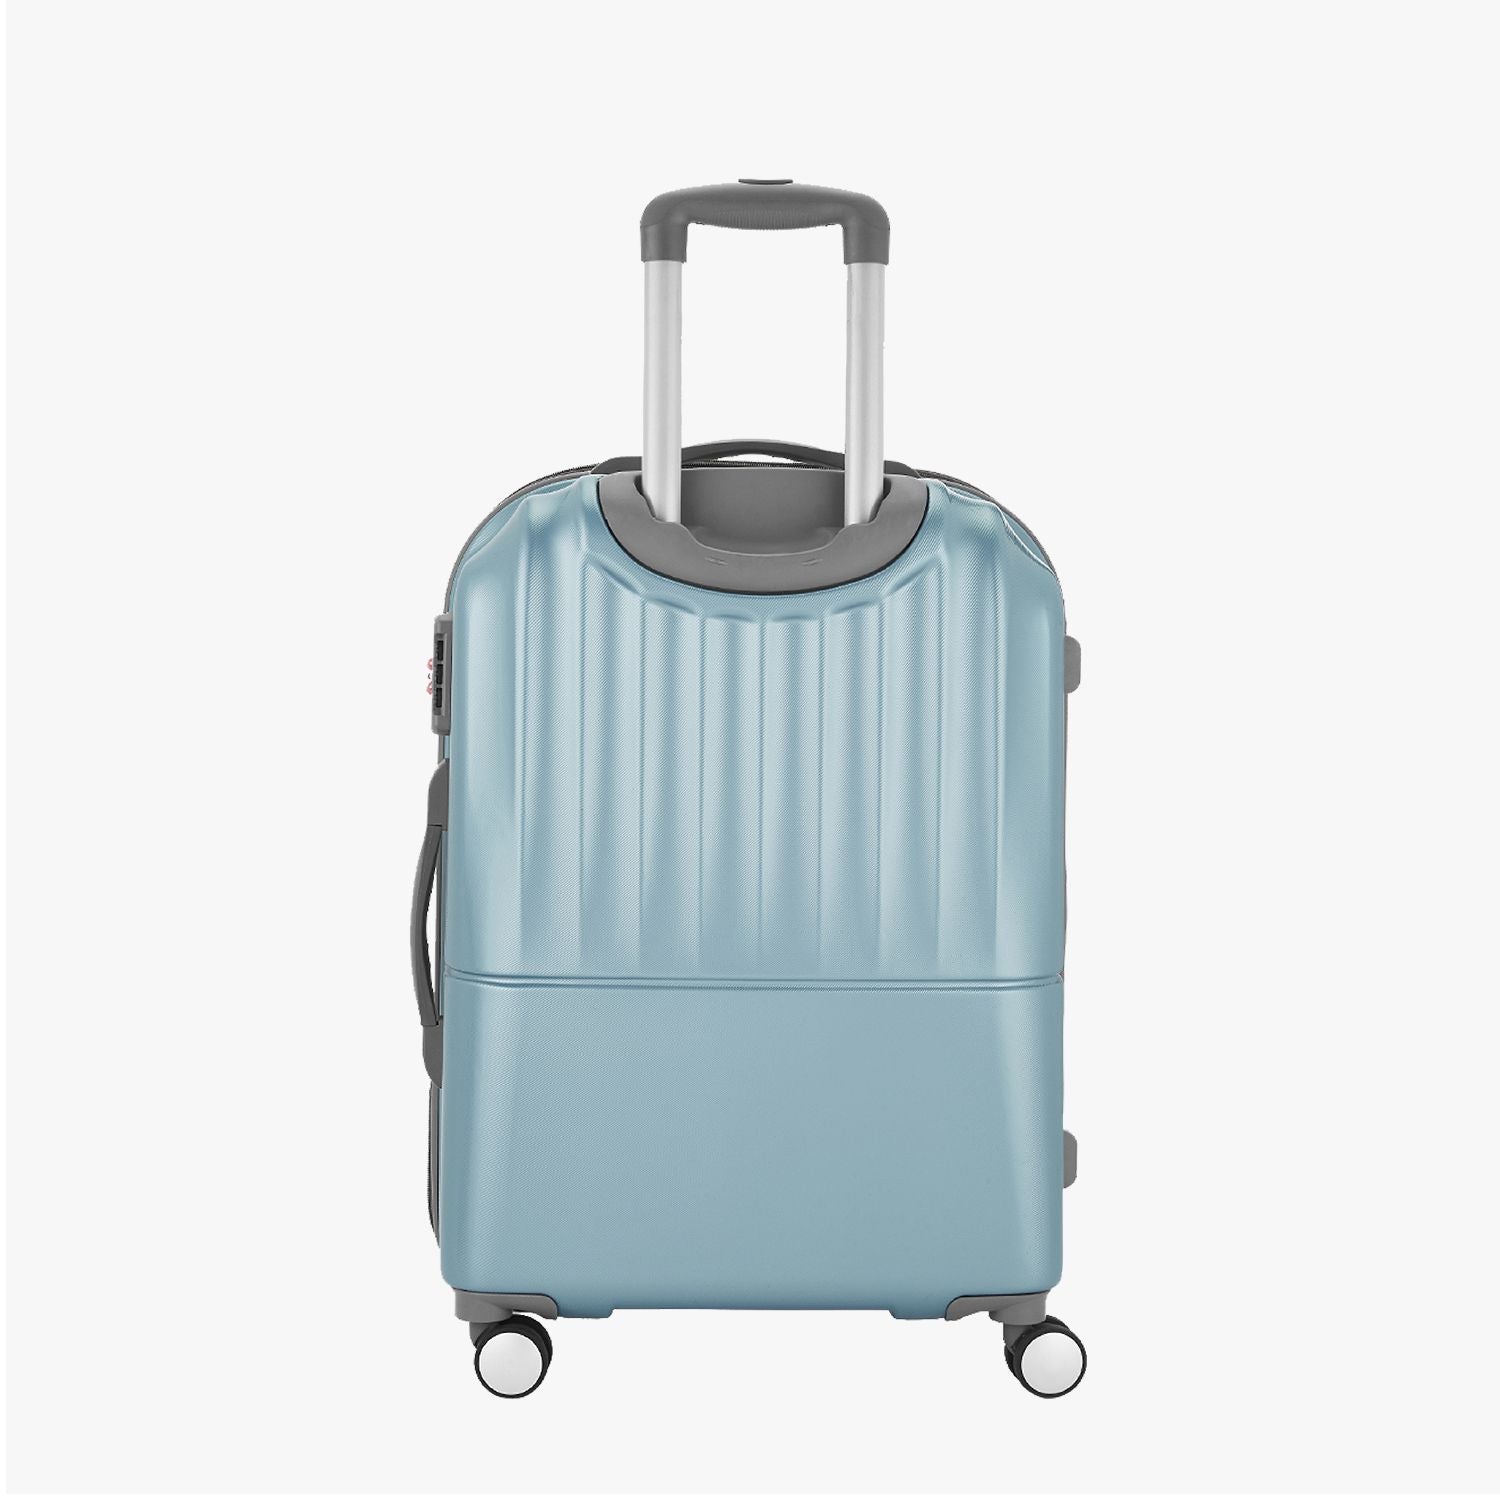 Palm Hard Luggage- Pearl Blue